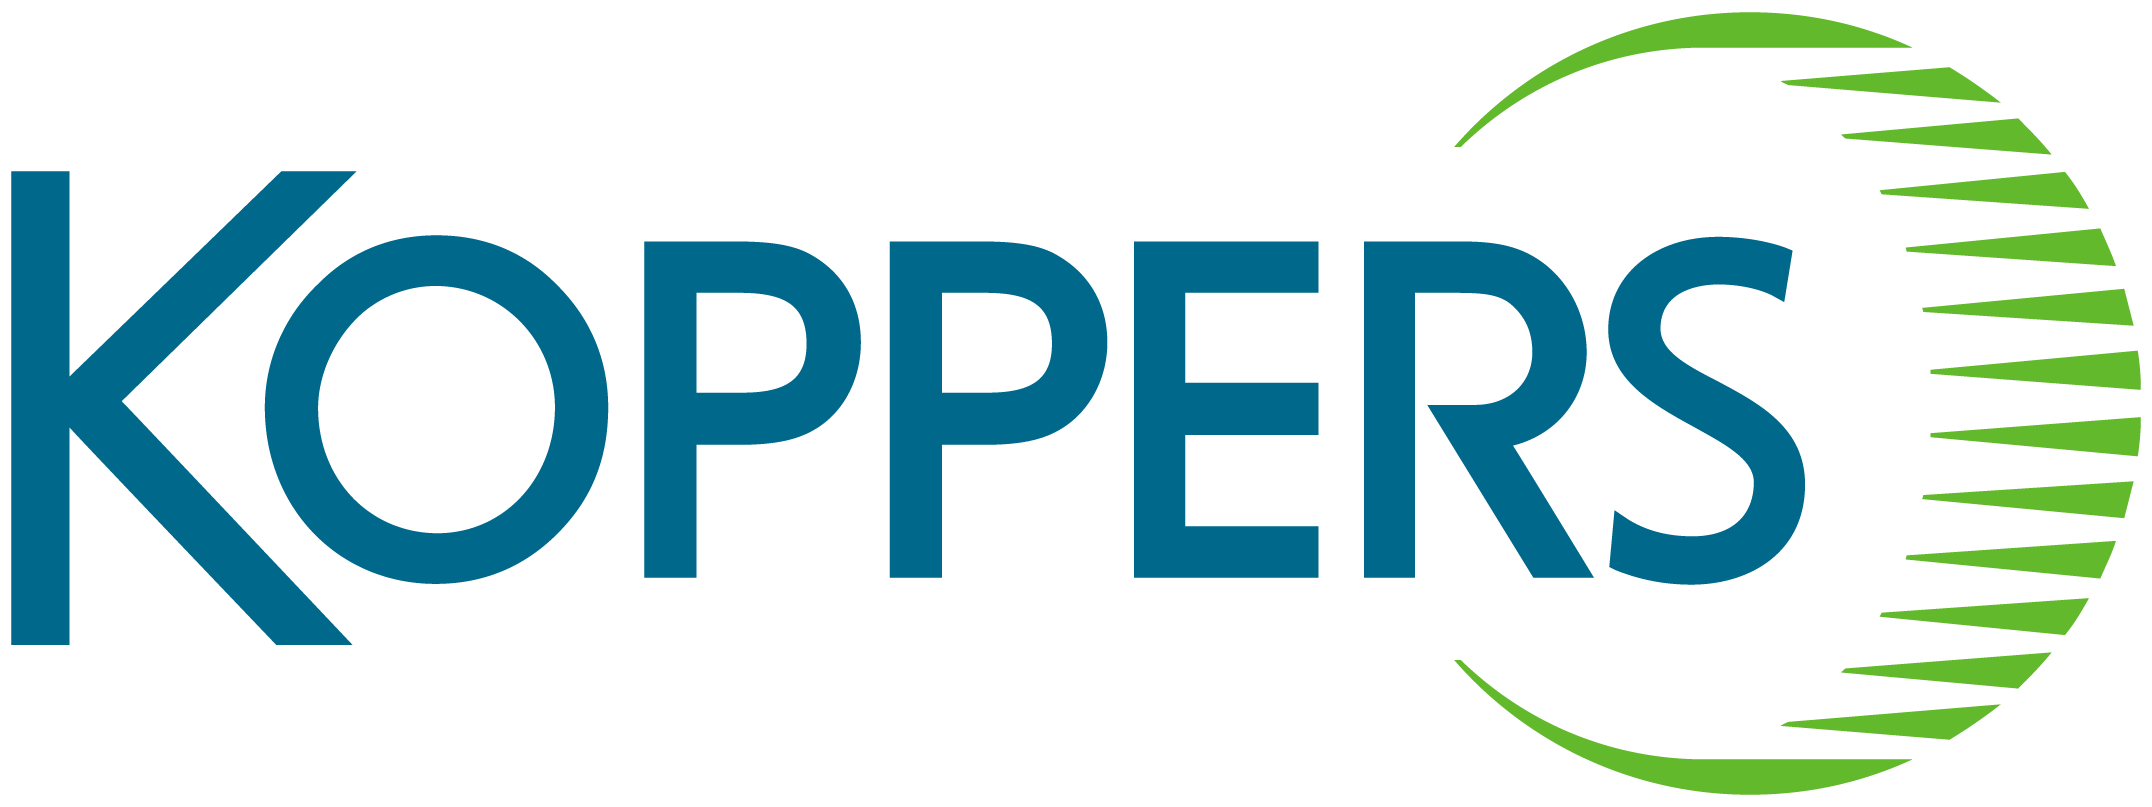 Koppers_logo copy